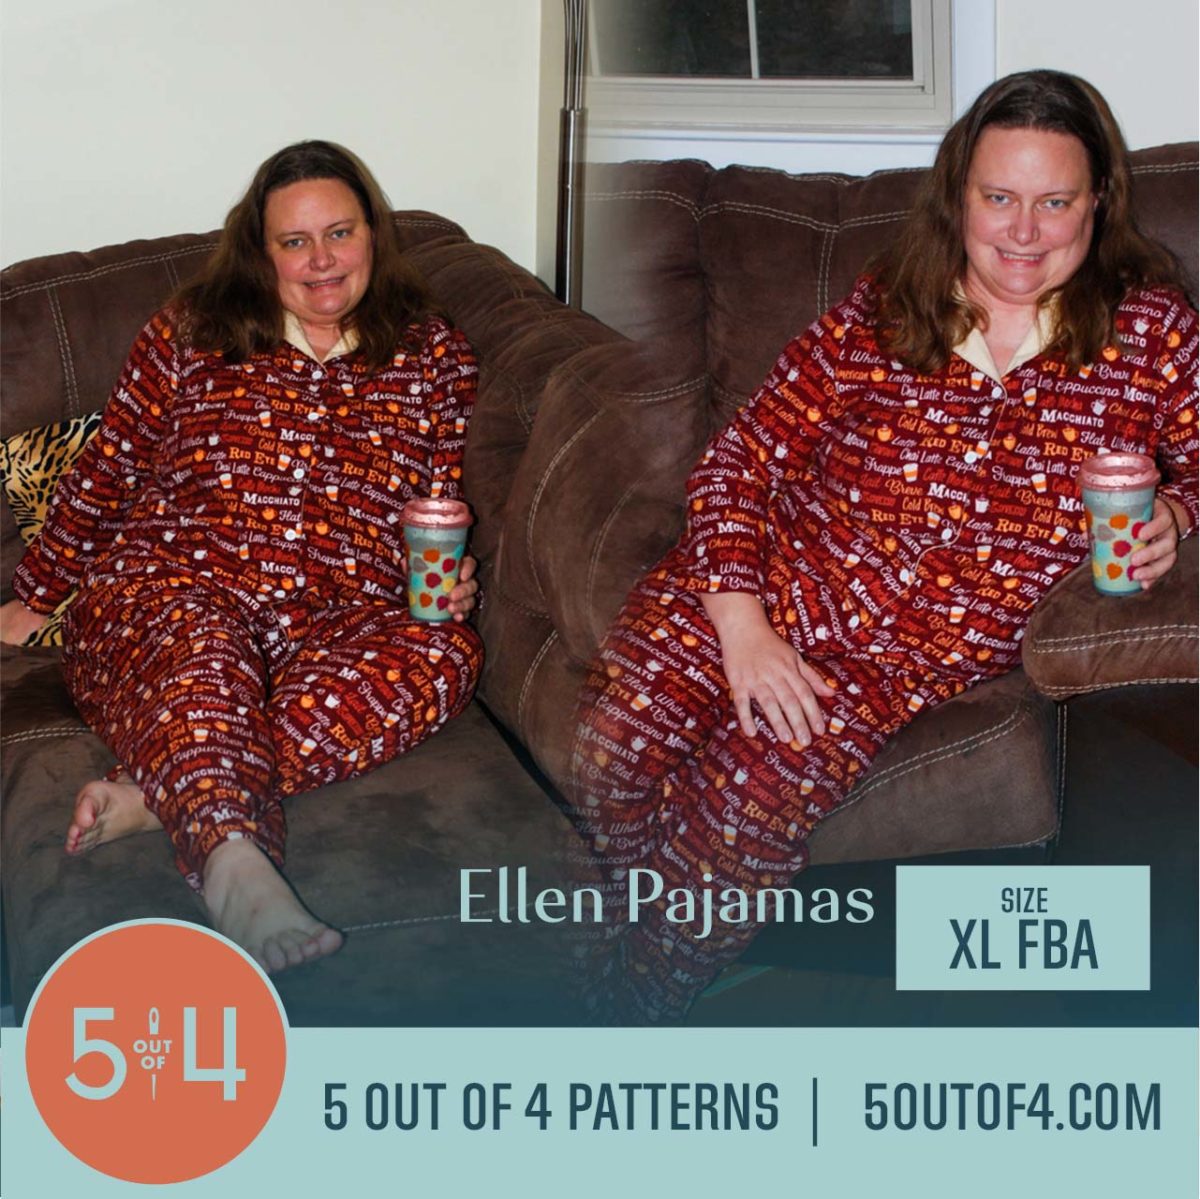 5oo4 Woven Pajama Pattern for Women size XL FBA